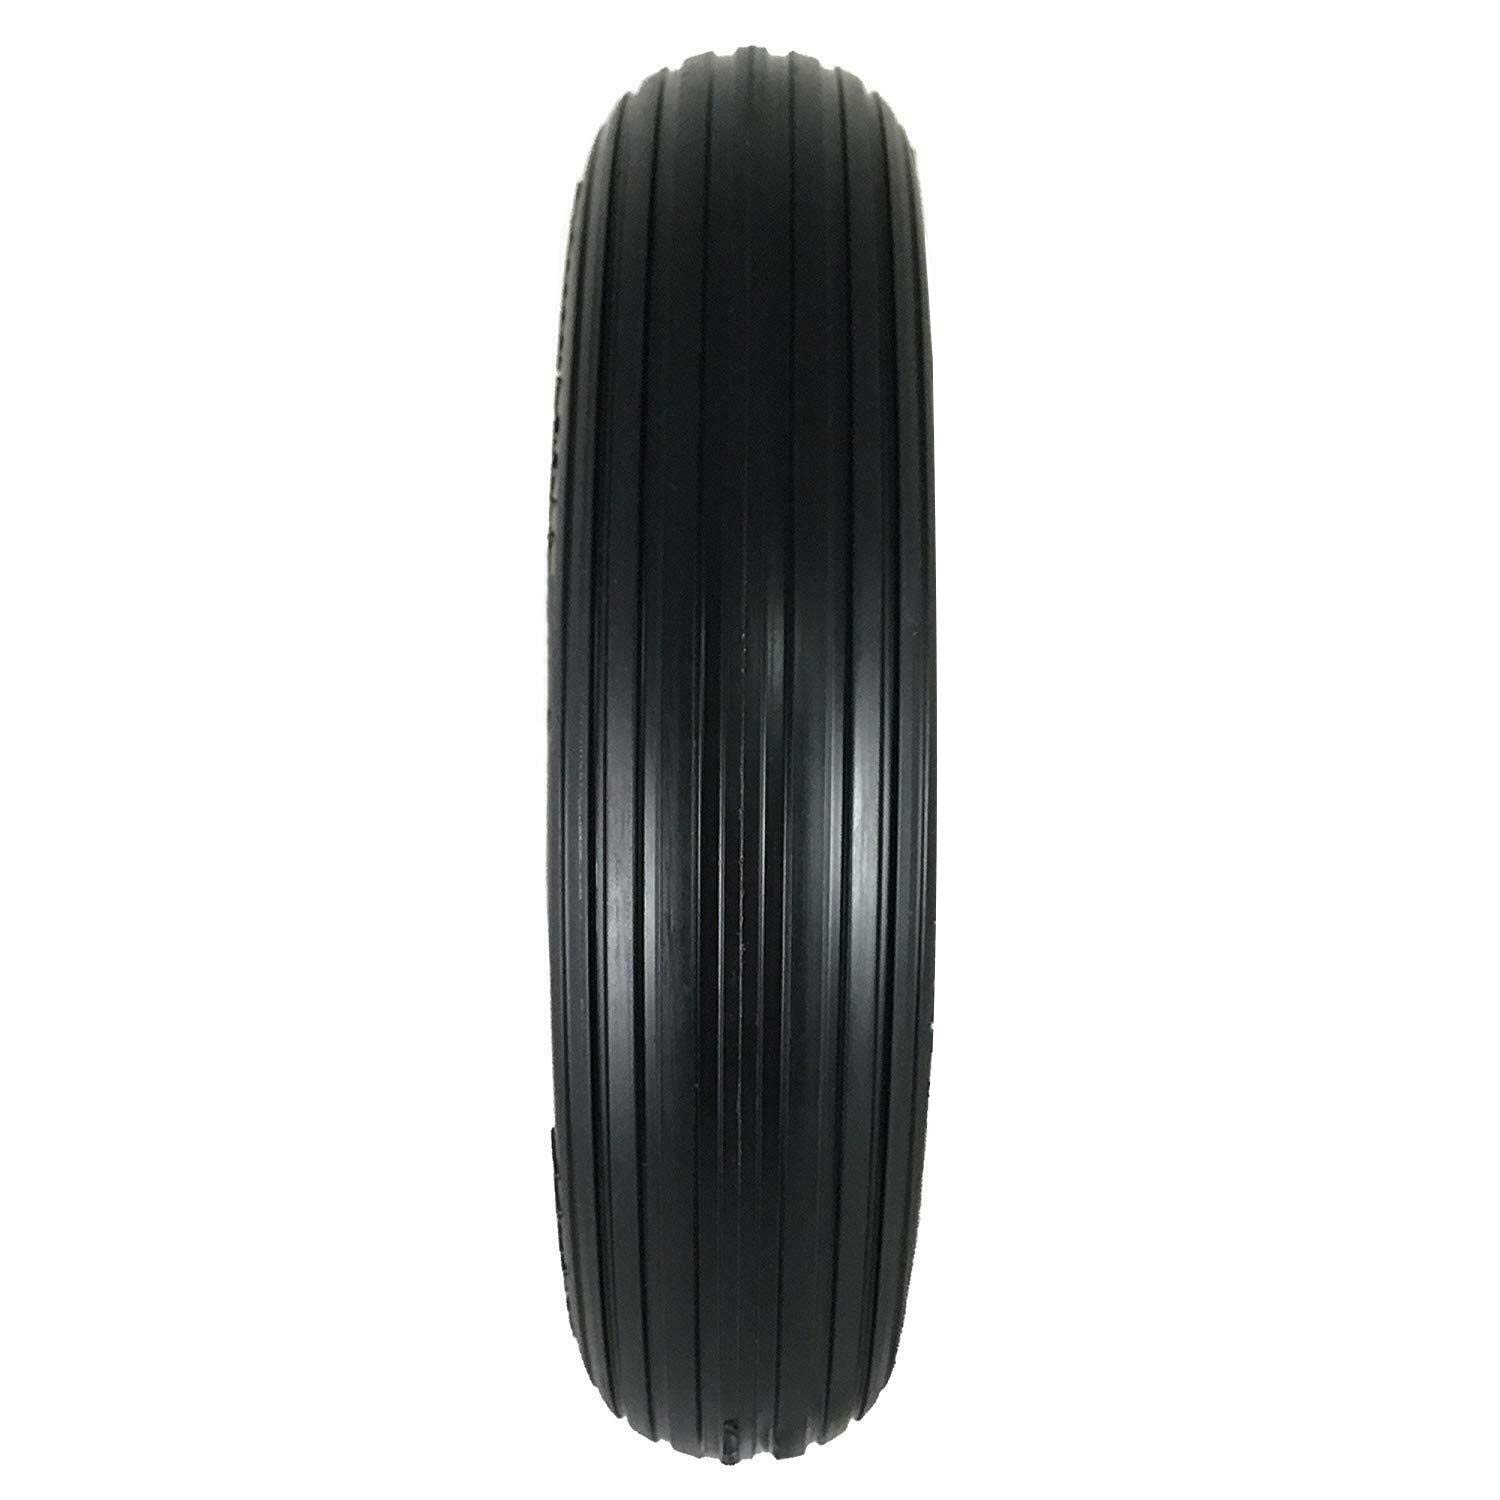 Wheelbarrow Tire 4.80/4.00-8 Flat-Free with 3/4 & 5/8 Wheel Bearing, 3-6" Hub 16" Solid Rubber Wheel Barrel Tires Non-Slip for Yard Cart Garden Wagon (Black)